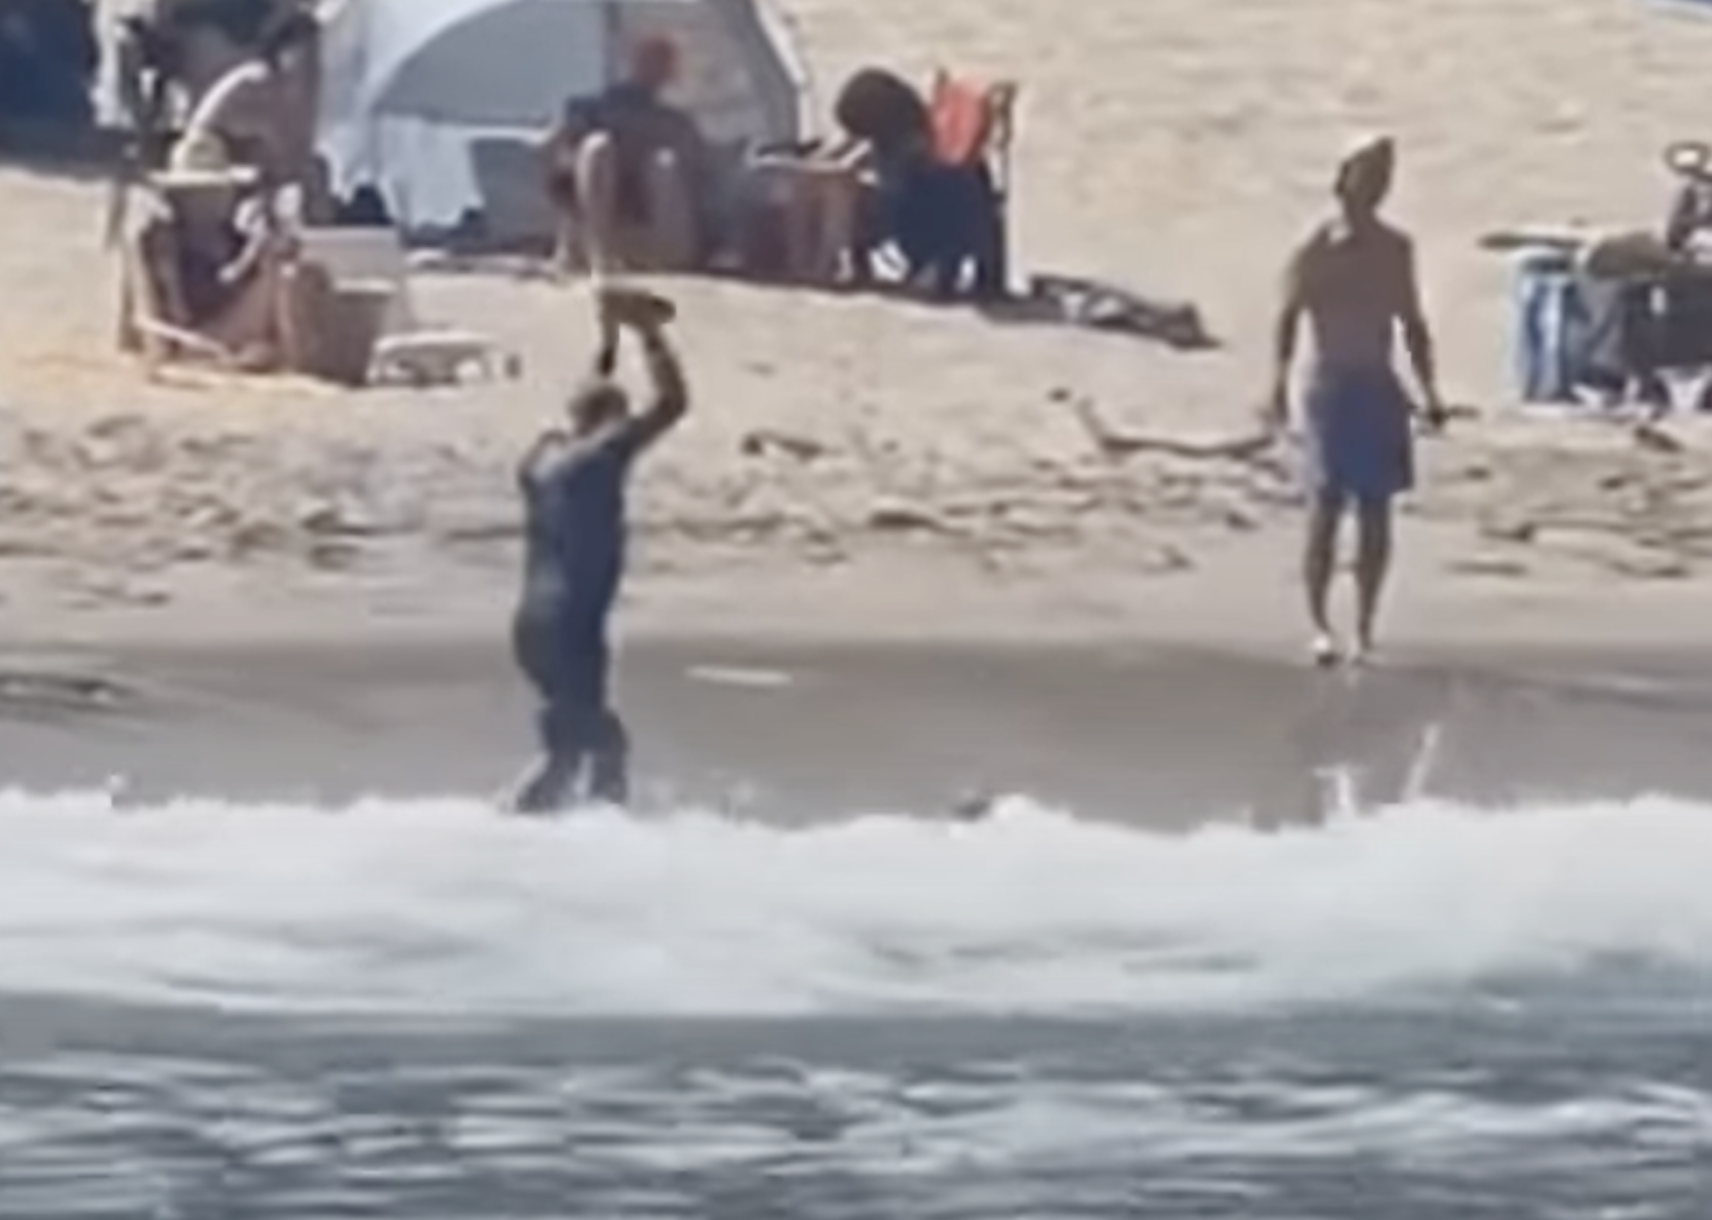 WATCH: Angriest Surfer Loses Job After Destroying Burner's Board